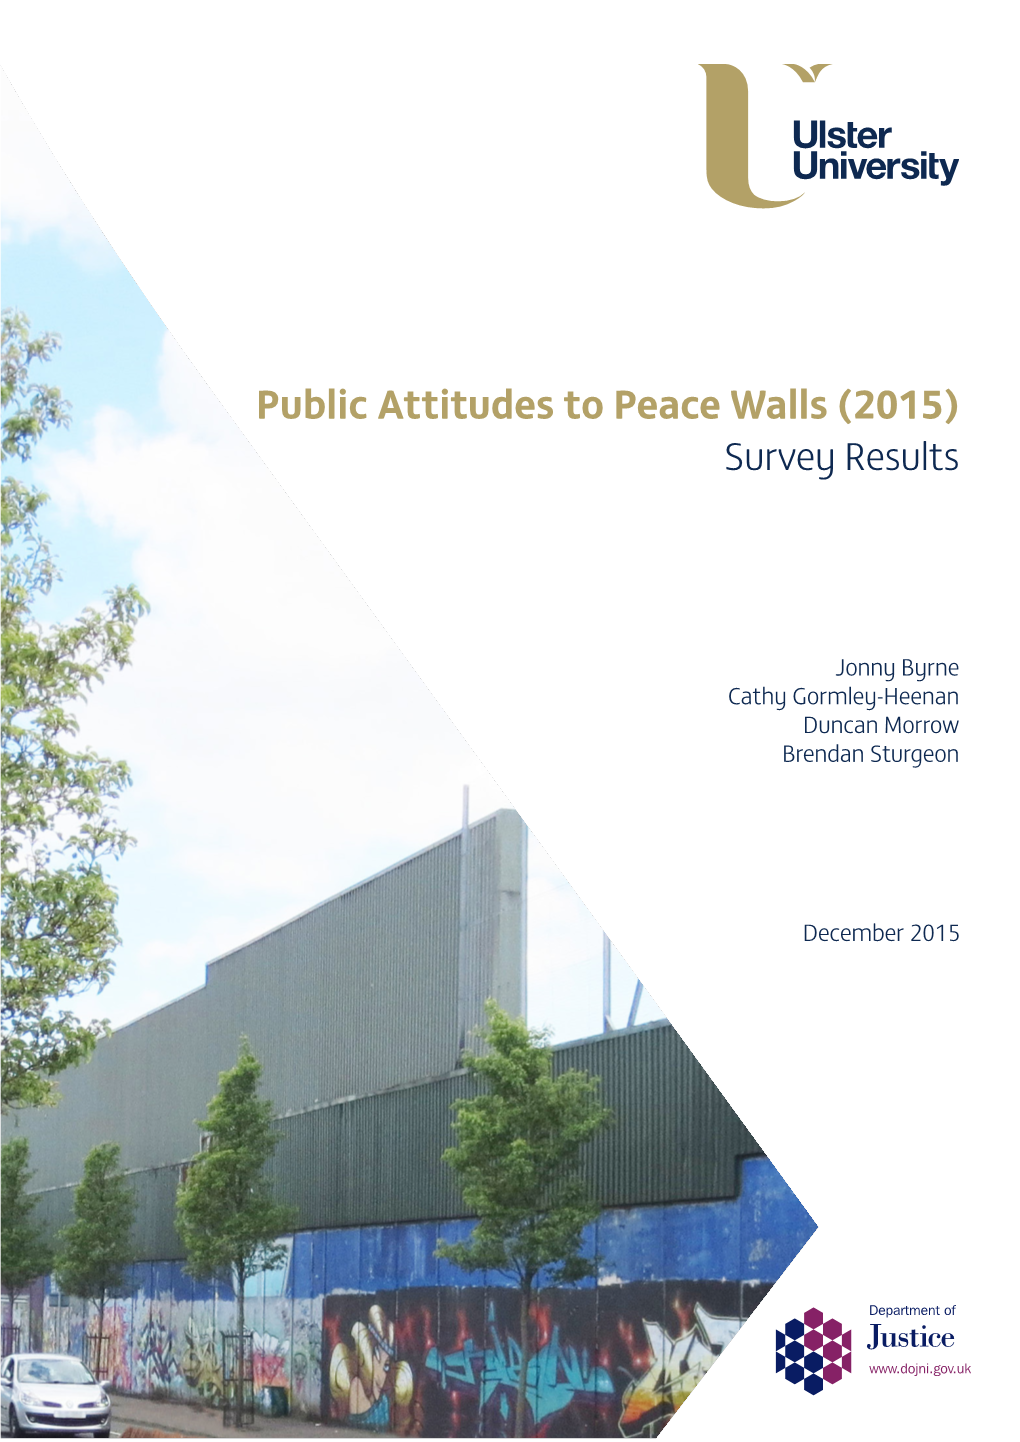 Public Attitudes to Peace Walls (2015) Survey Results